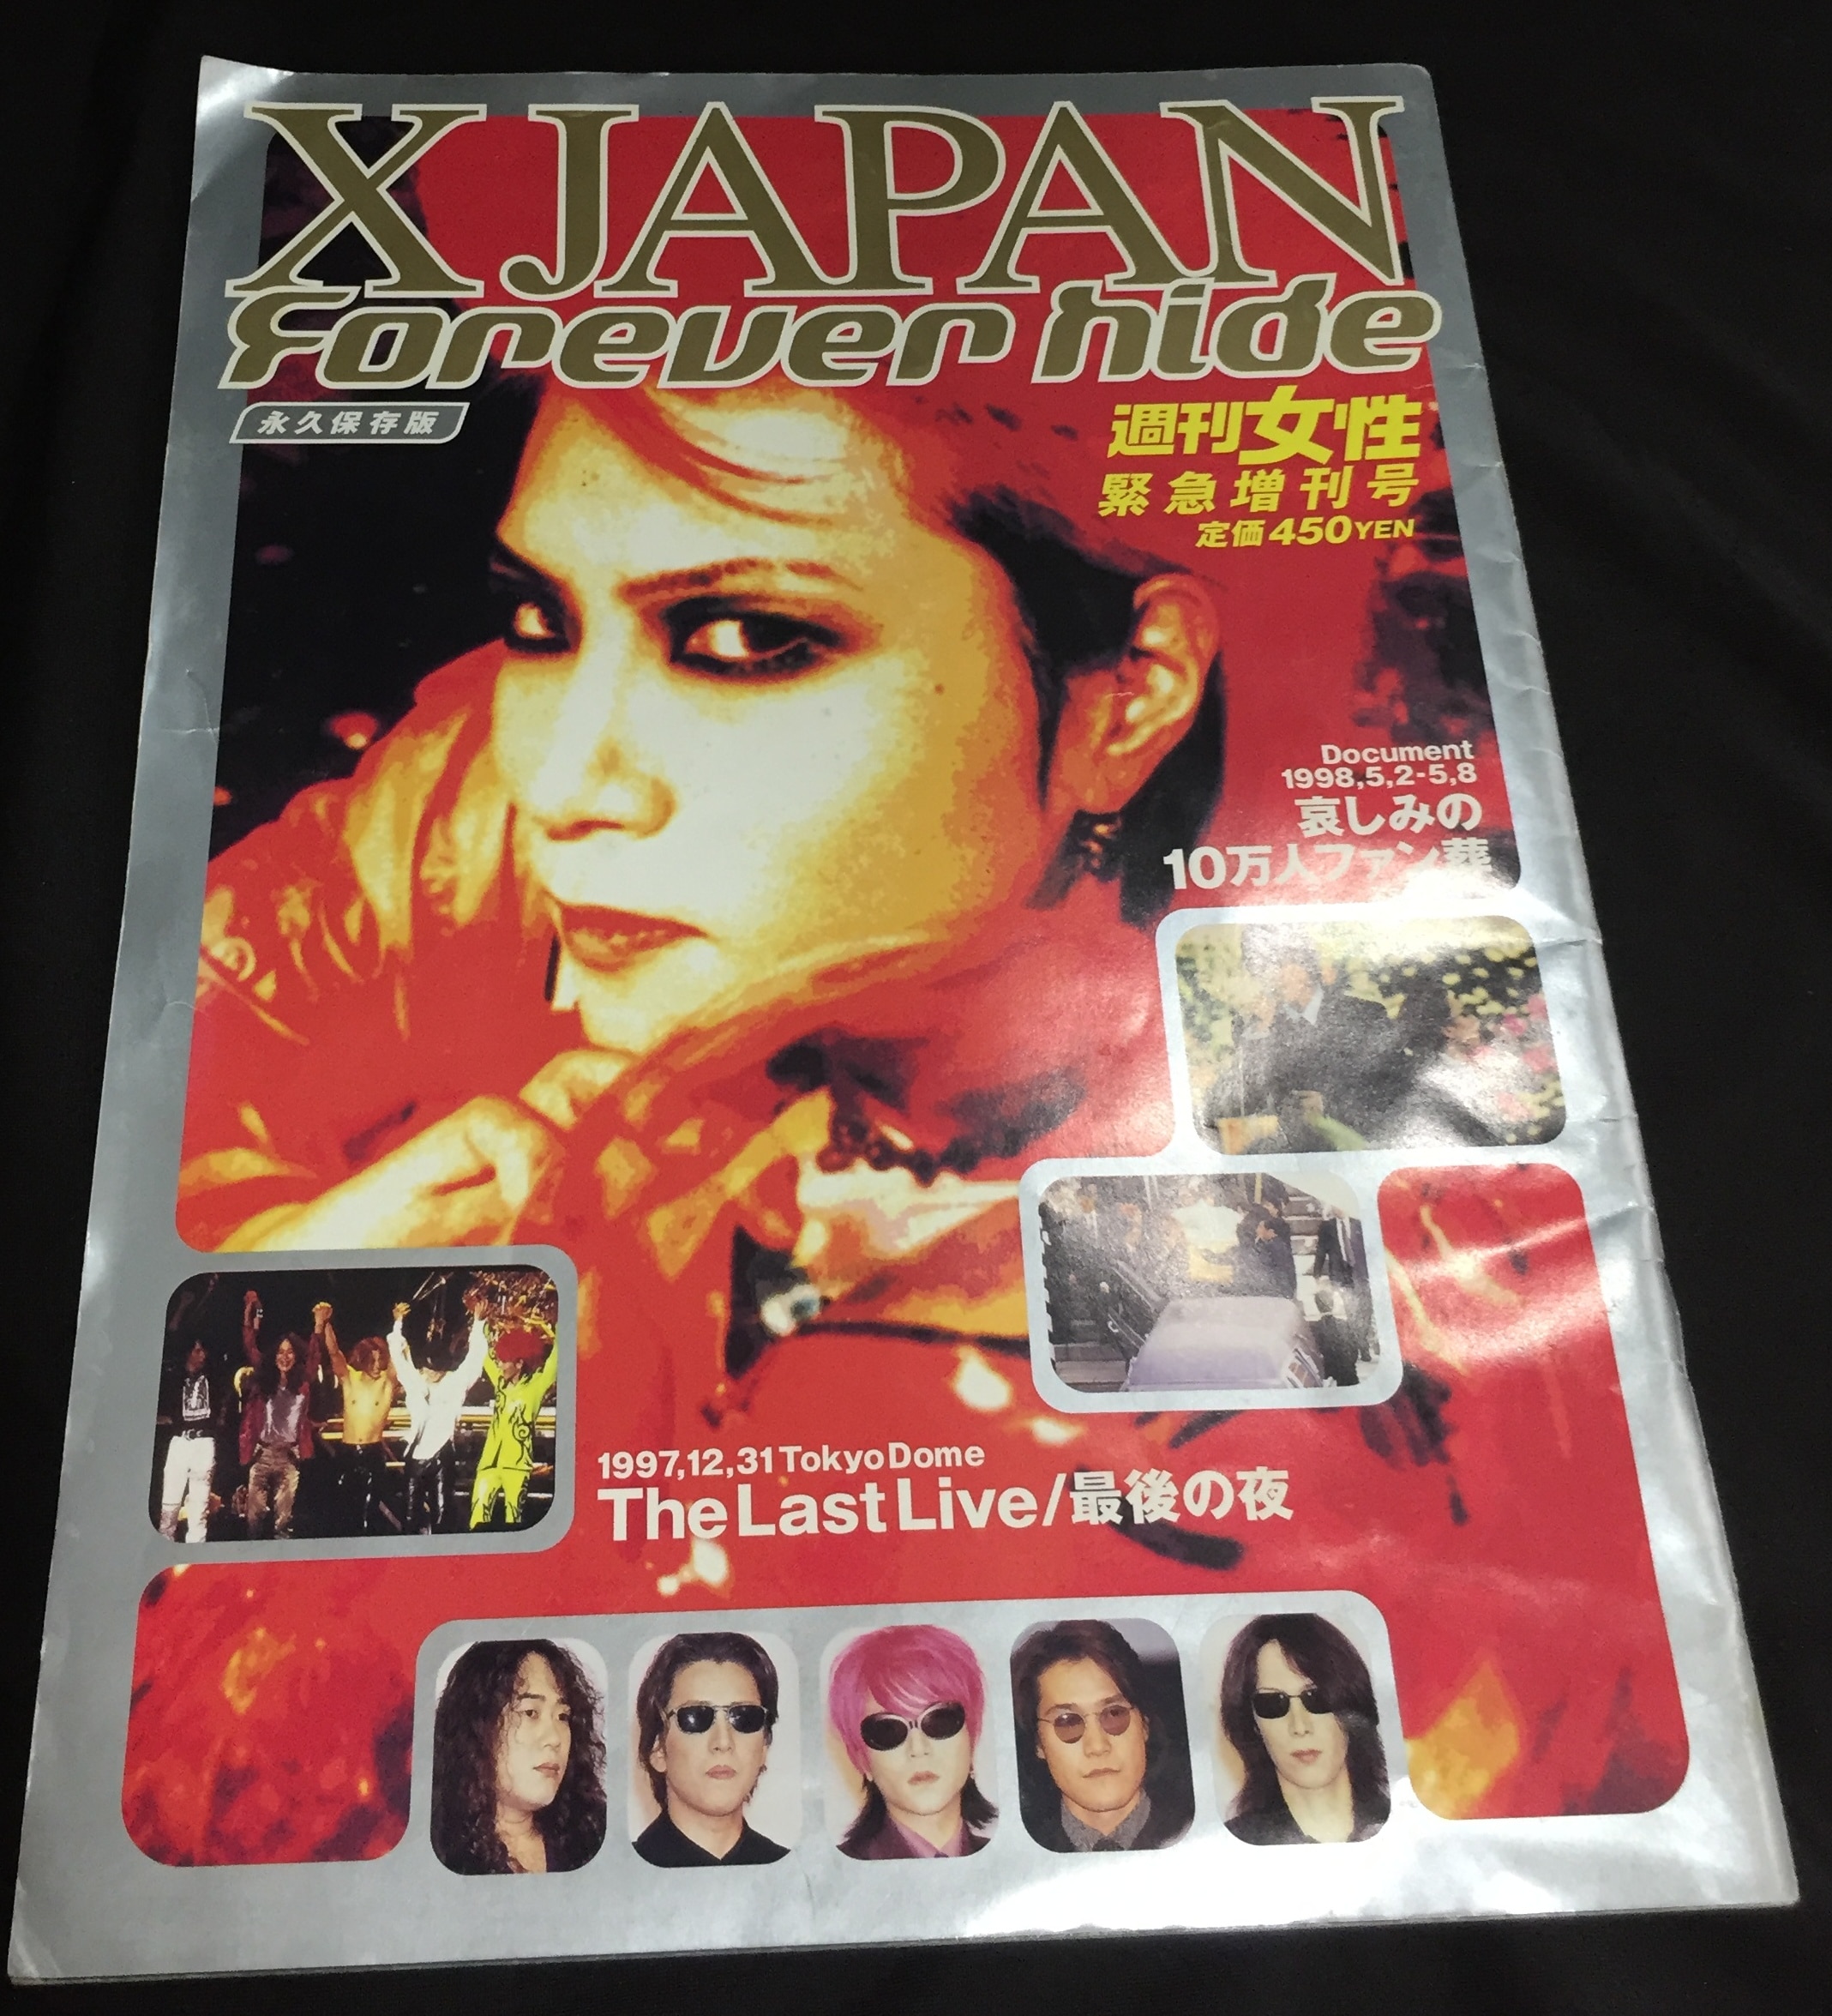 X JAPAN hide 雑誌 X JAPAN Forever hide 永久保存版 週刊女性緊急増刊 